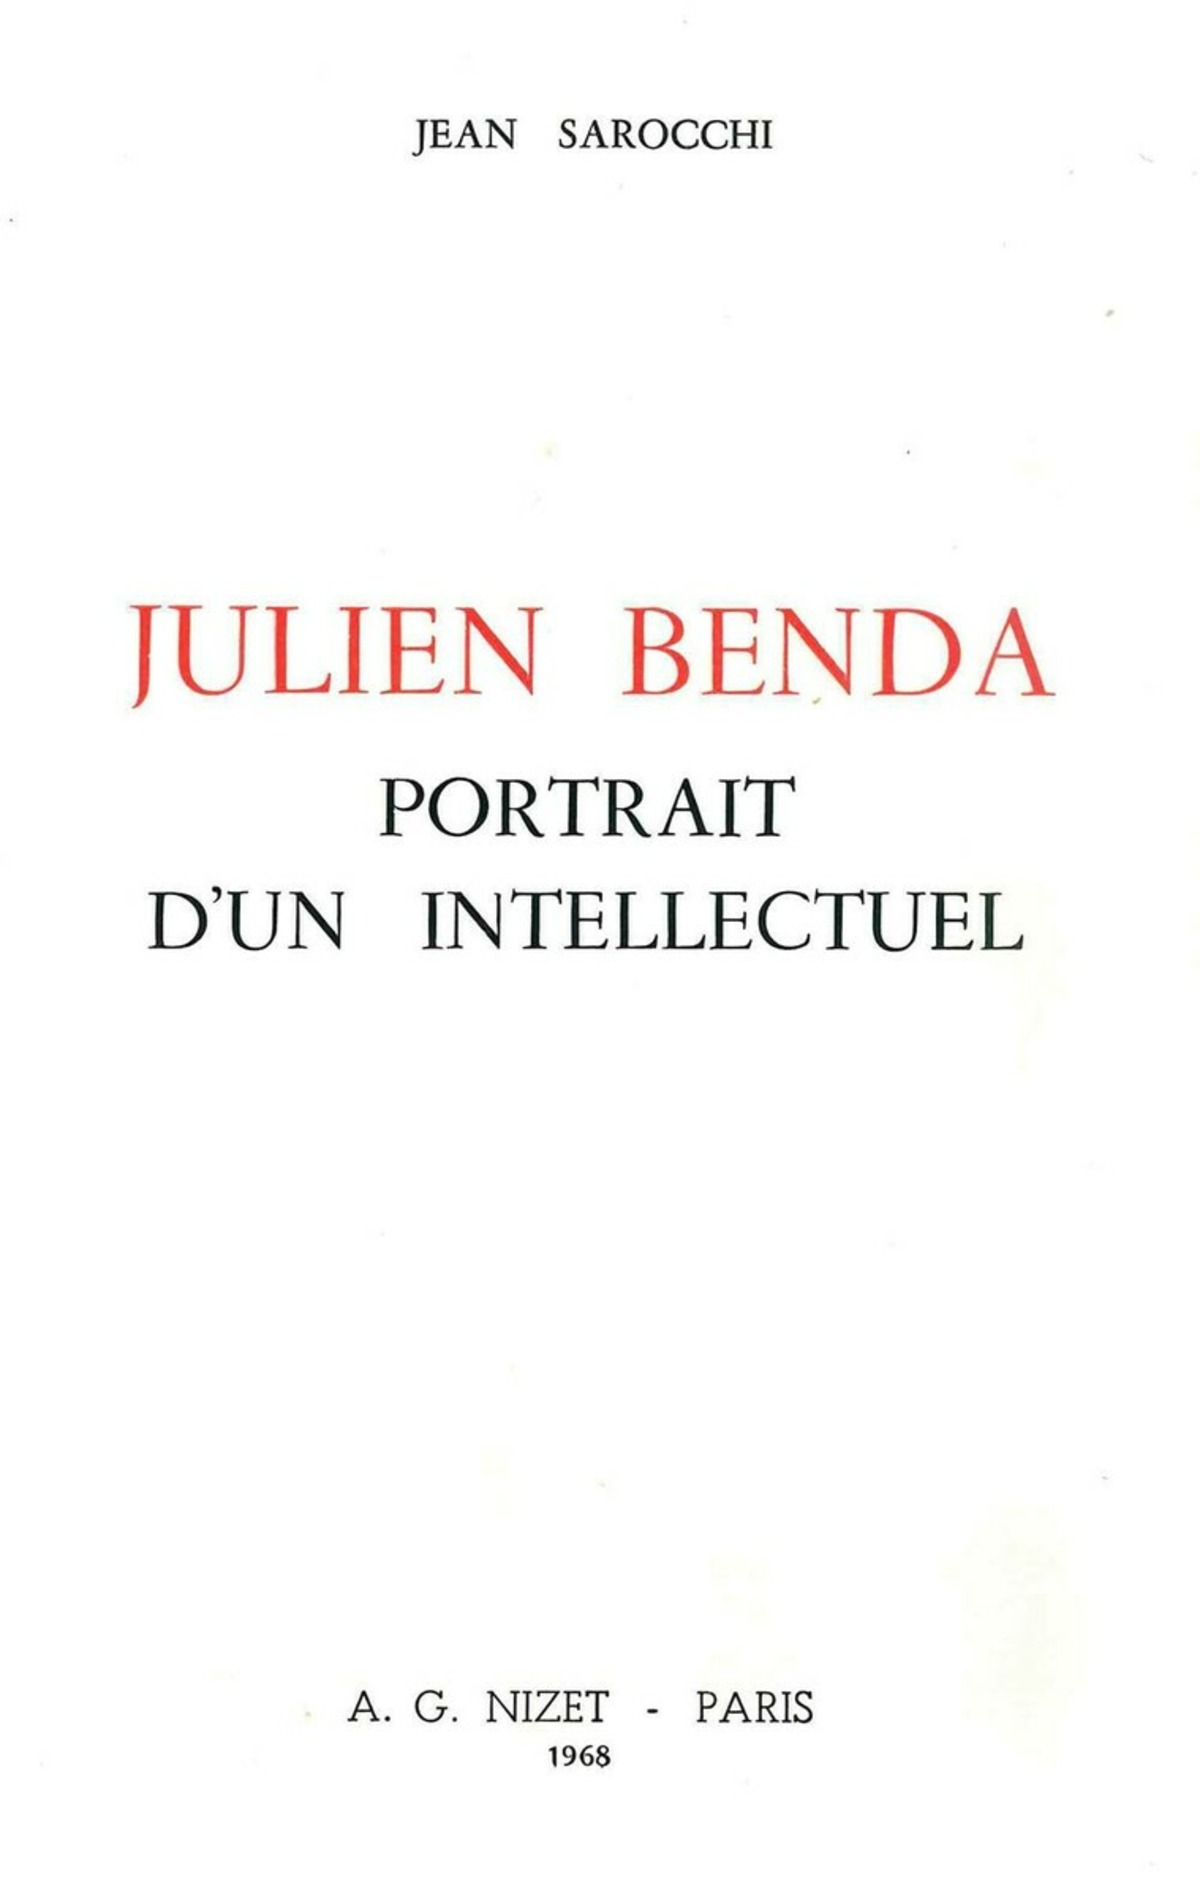 Julien Benda, portrait d'un intellectuel